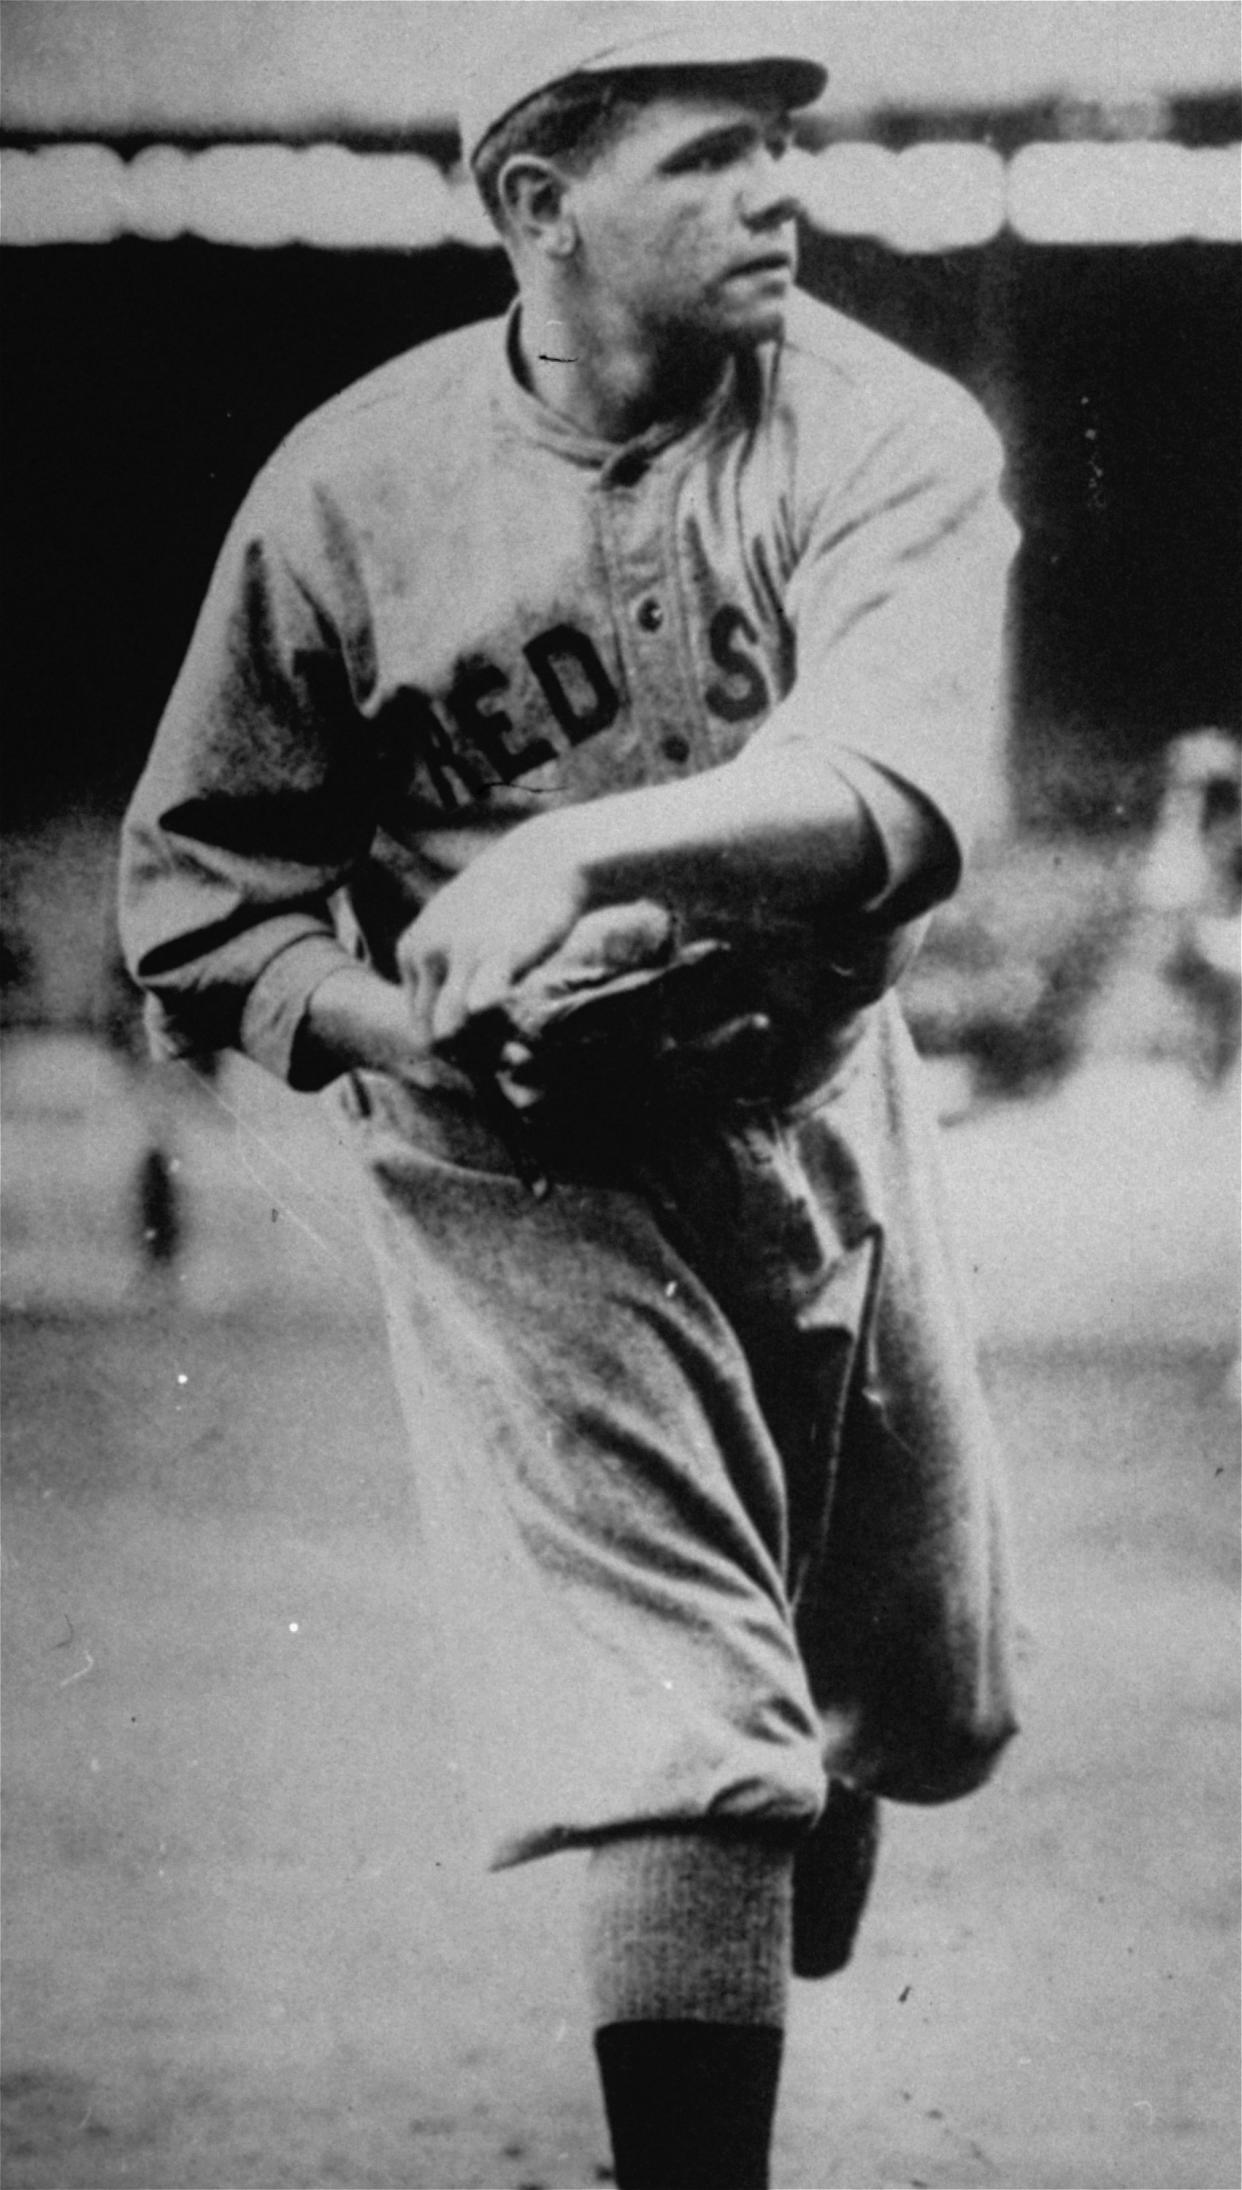 Babe Ruth pitching circa 1916. (AP Photo)